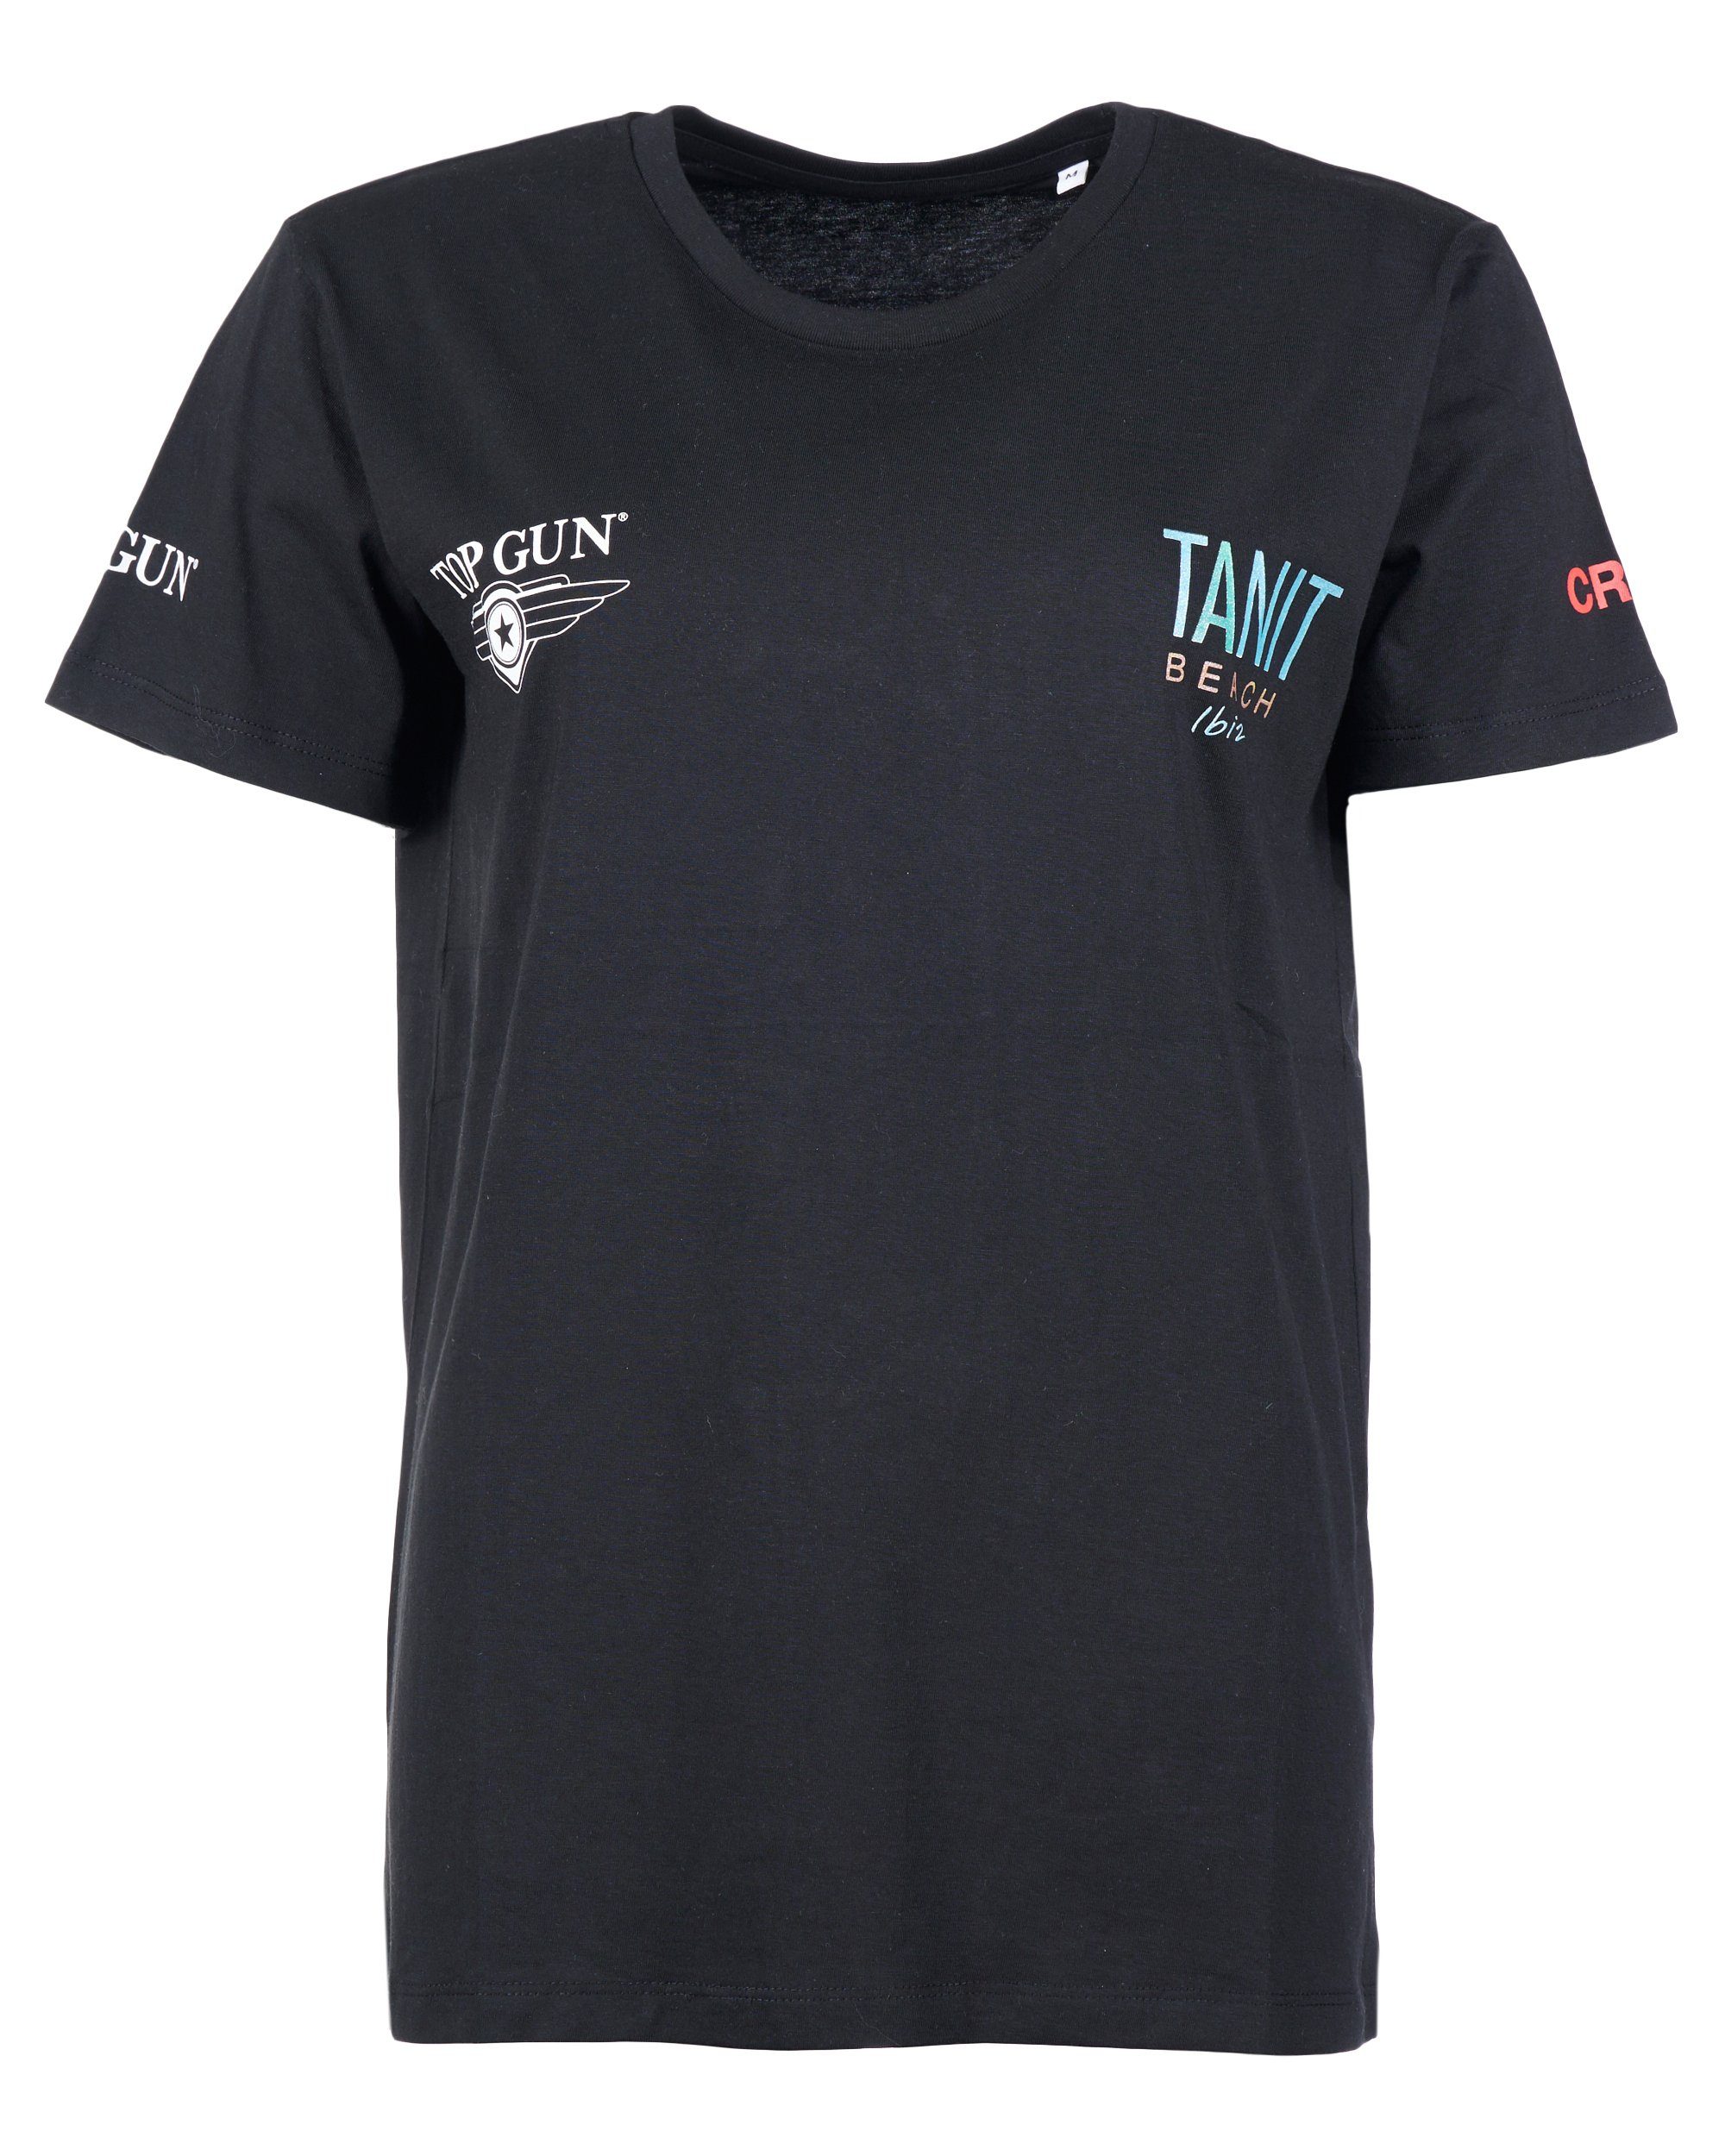 TOP GUN T-Shirt NB20119 black